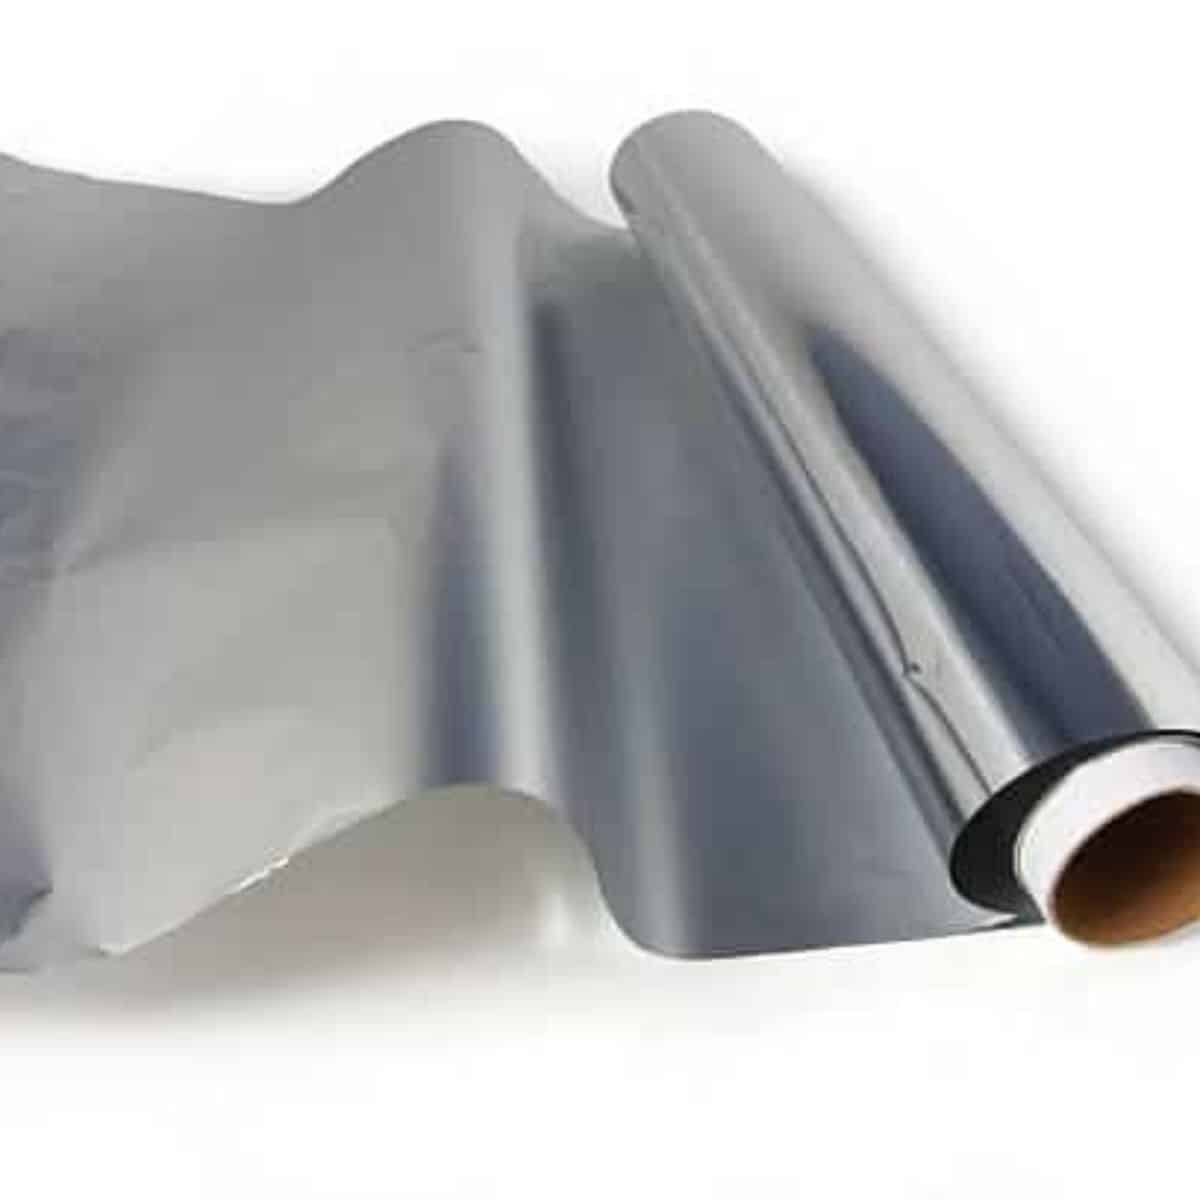 A roll of aluminum foil unrolling. 